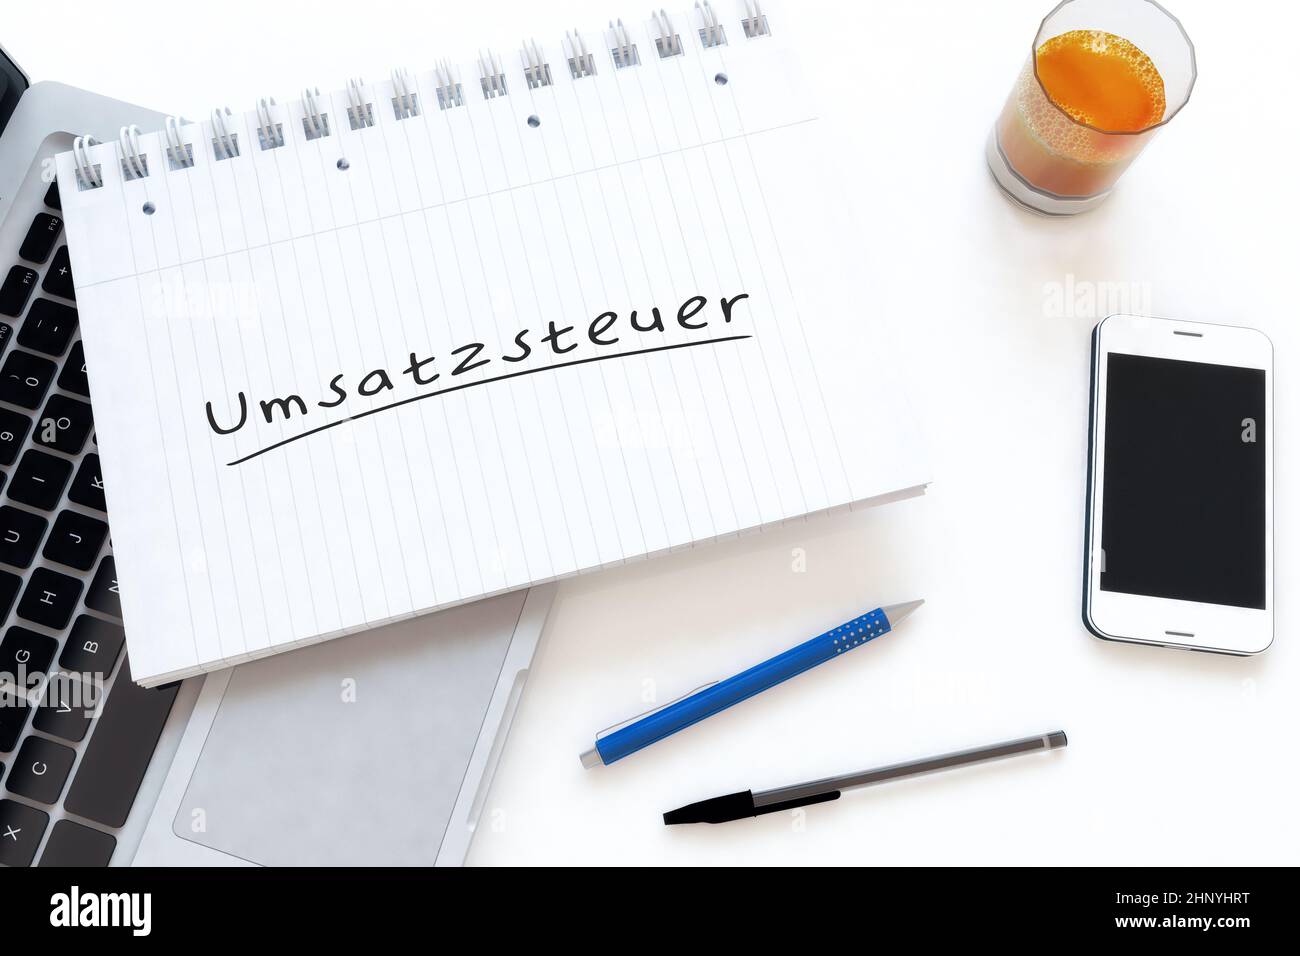 Umsatzsteuer - german word for sales tax or VAT - handwritten text in a notebook on a desk - 3d render illustration. Stock Photo